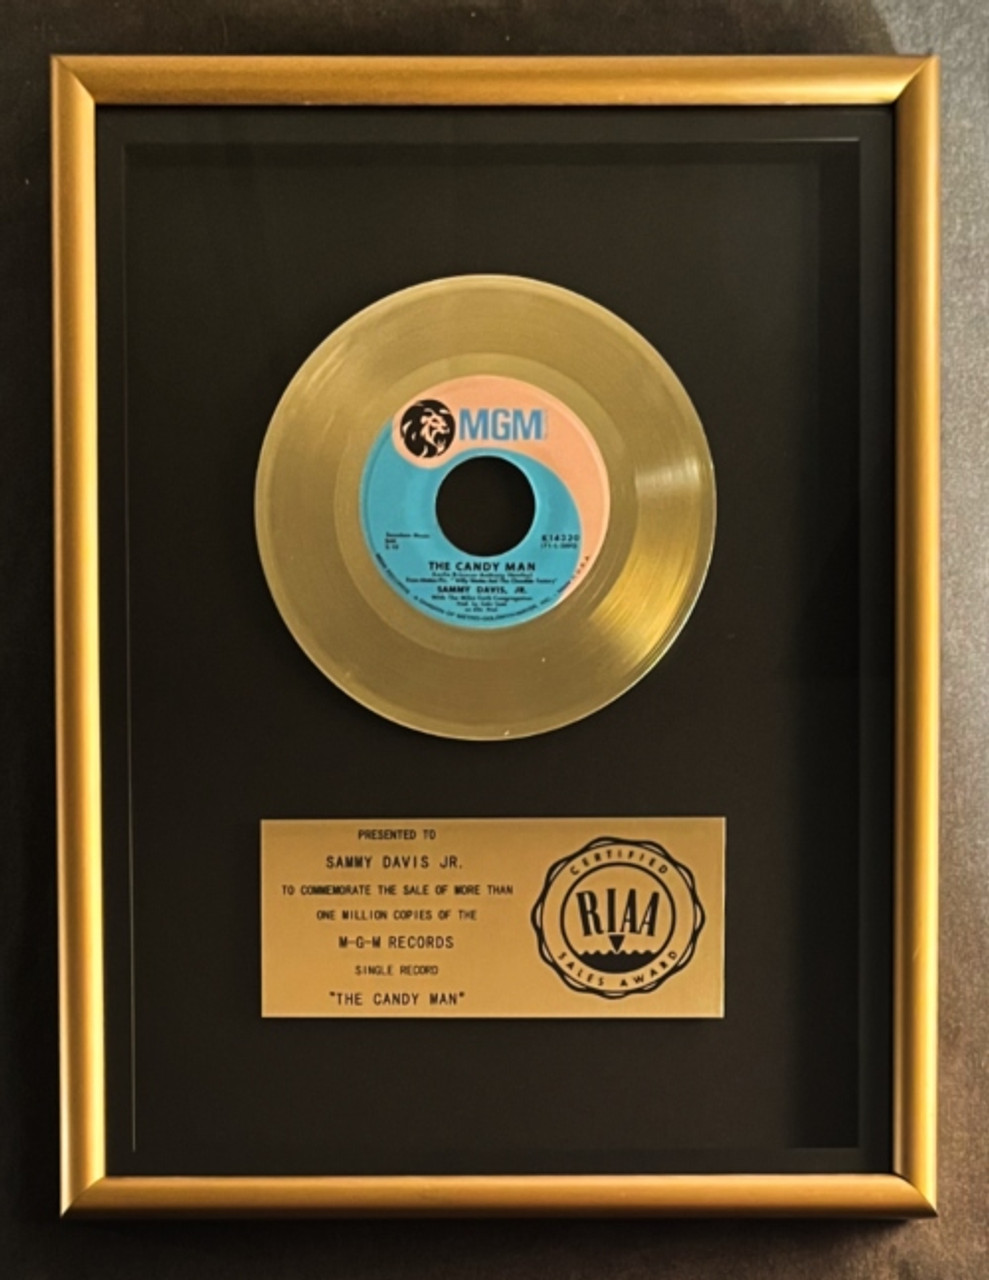 Sammy Davis Jr. The Candy Man 45 Gold RIAA Record Award MGM Records
